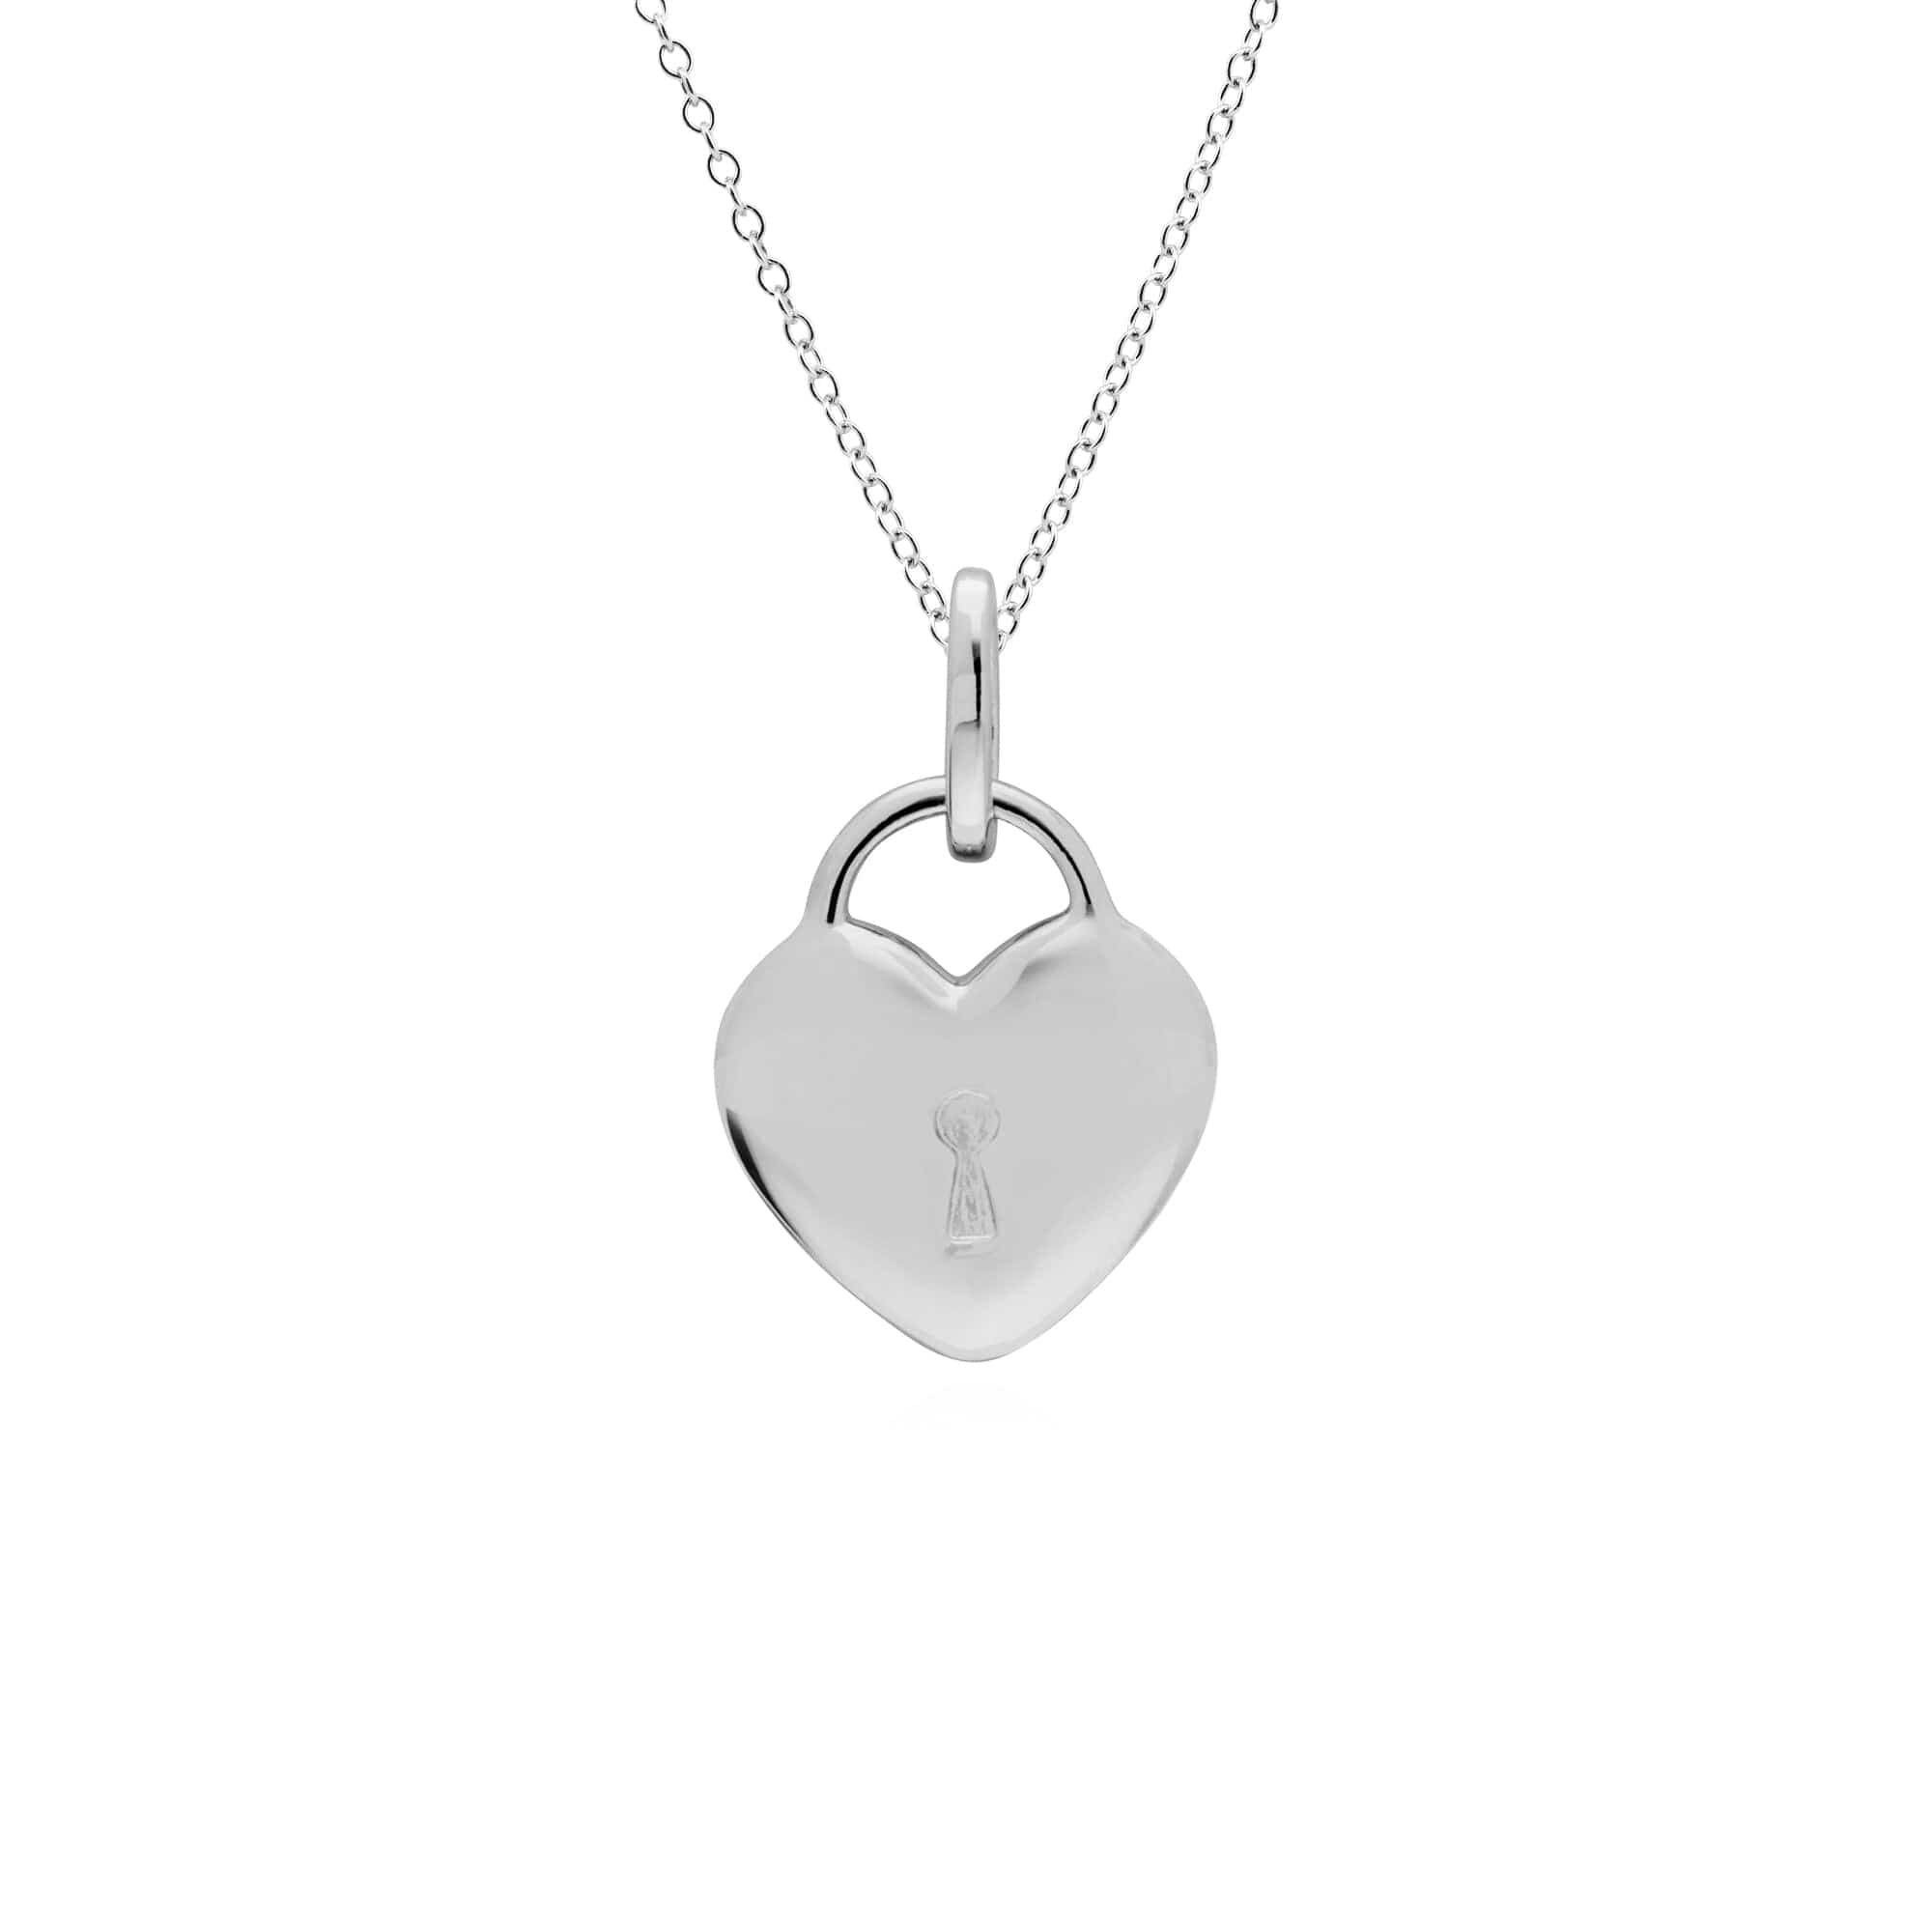 270P026406925-270P027001925 Classic Heart Lock Pendant & Garnet Key Charm in 925 Sterling Silver 3